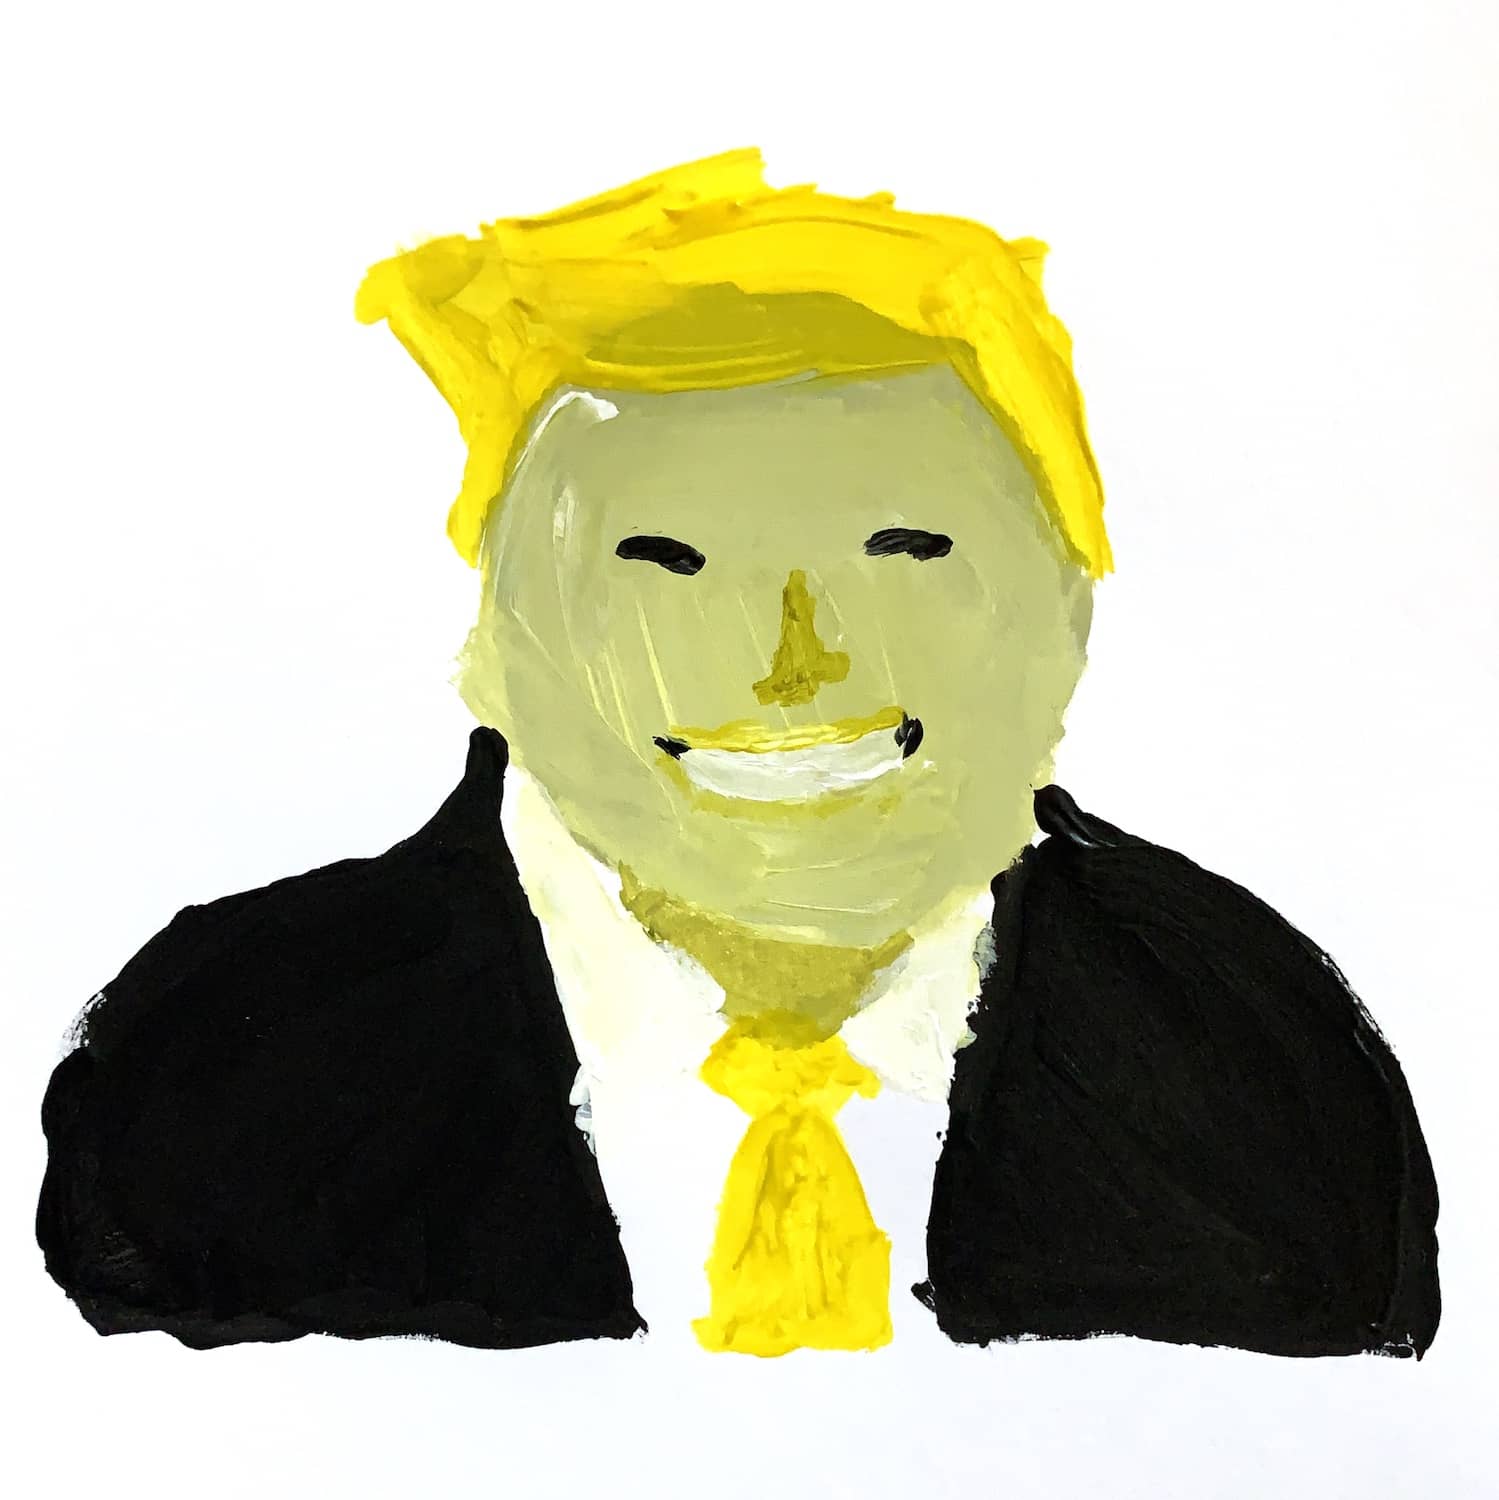 Artwork titled 'Trump' on 2021